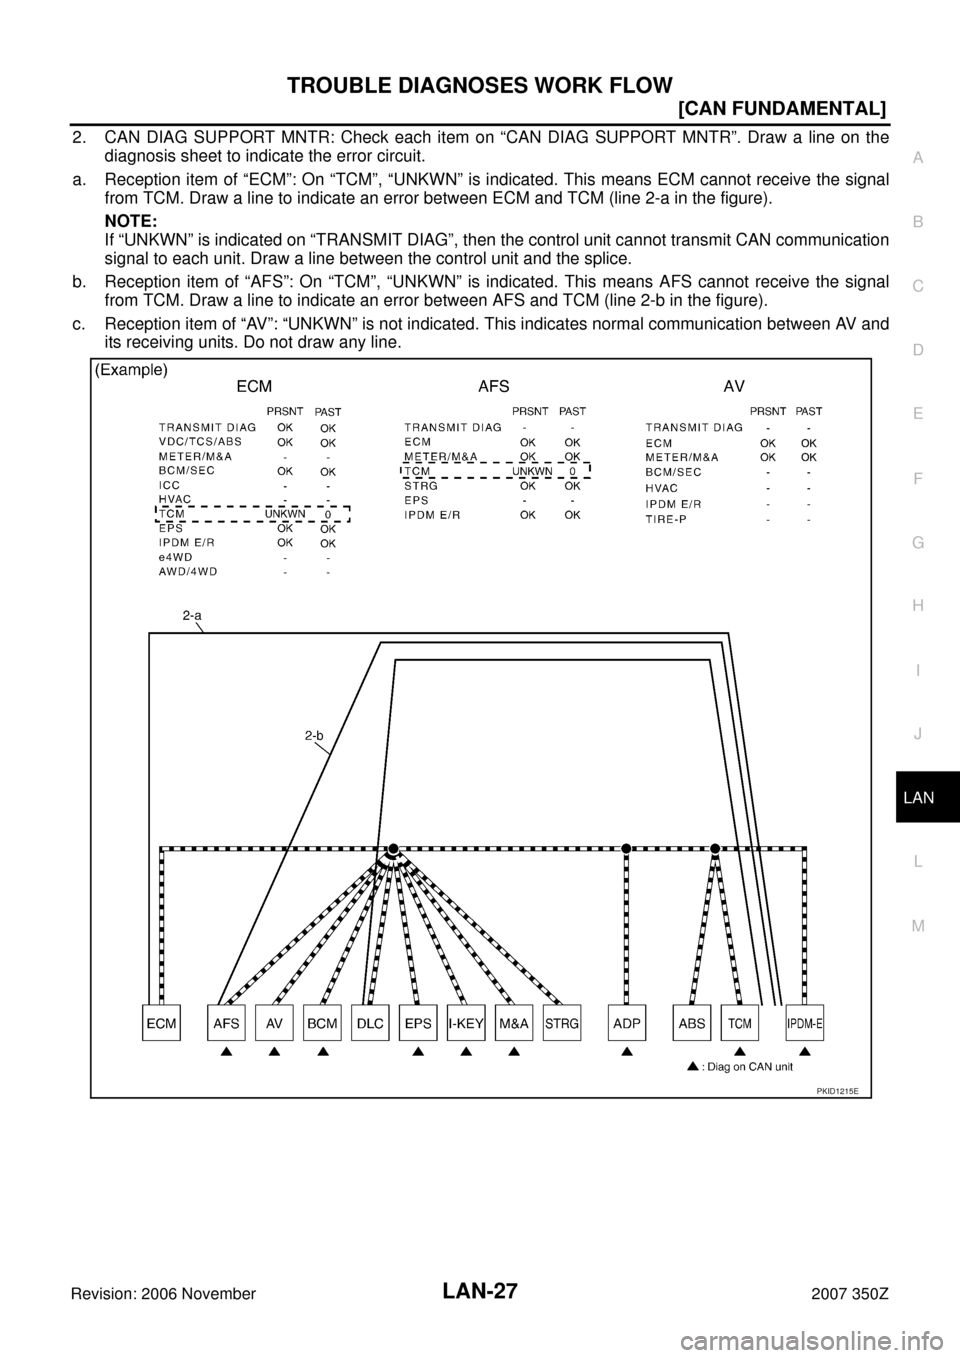 NISSAN 350Z 2007 Z33 LAN System Owners Manual TROUBLE DIAGNOSES WORK FLOW
LAN-27
[CAN FUNDAMENTAL]
C
D
E
F
G
H
I
J
L
MA
B
LAN
Revision: 2006 November2007 350Z
2. CAN DIAG SUPPORT MNTR: Check each item on “CAN DIAG SUPPORT MNTR”. Draw a line o